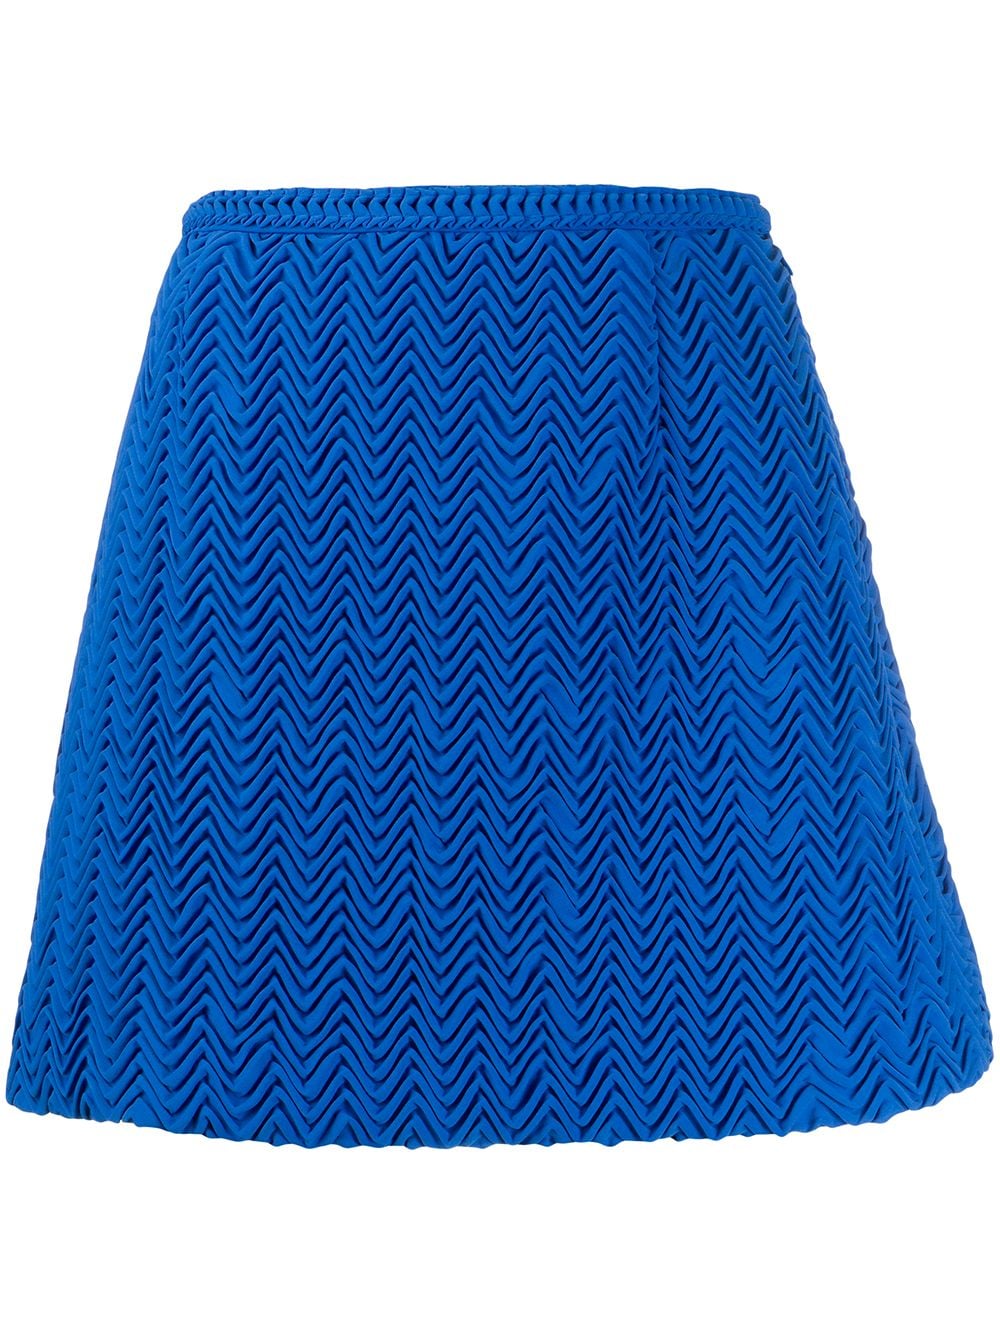 marco de vincenzo embroidered mini skirt - blue